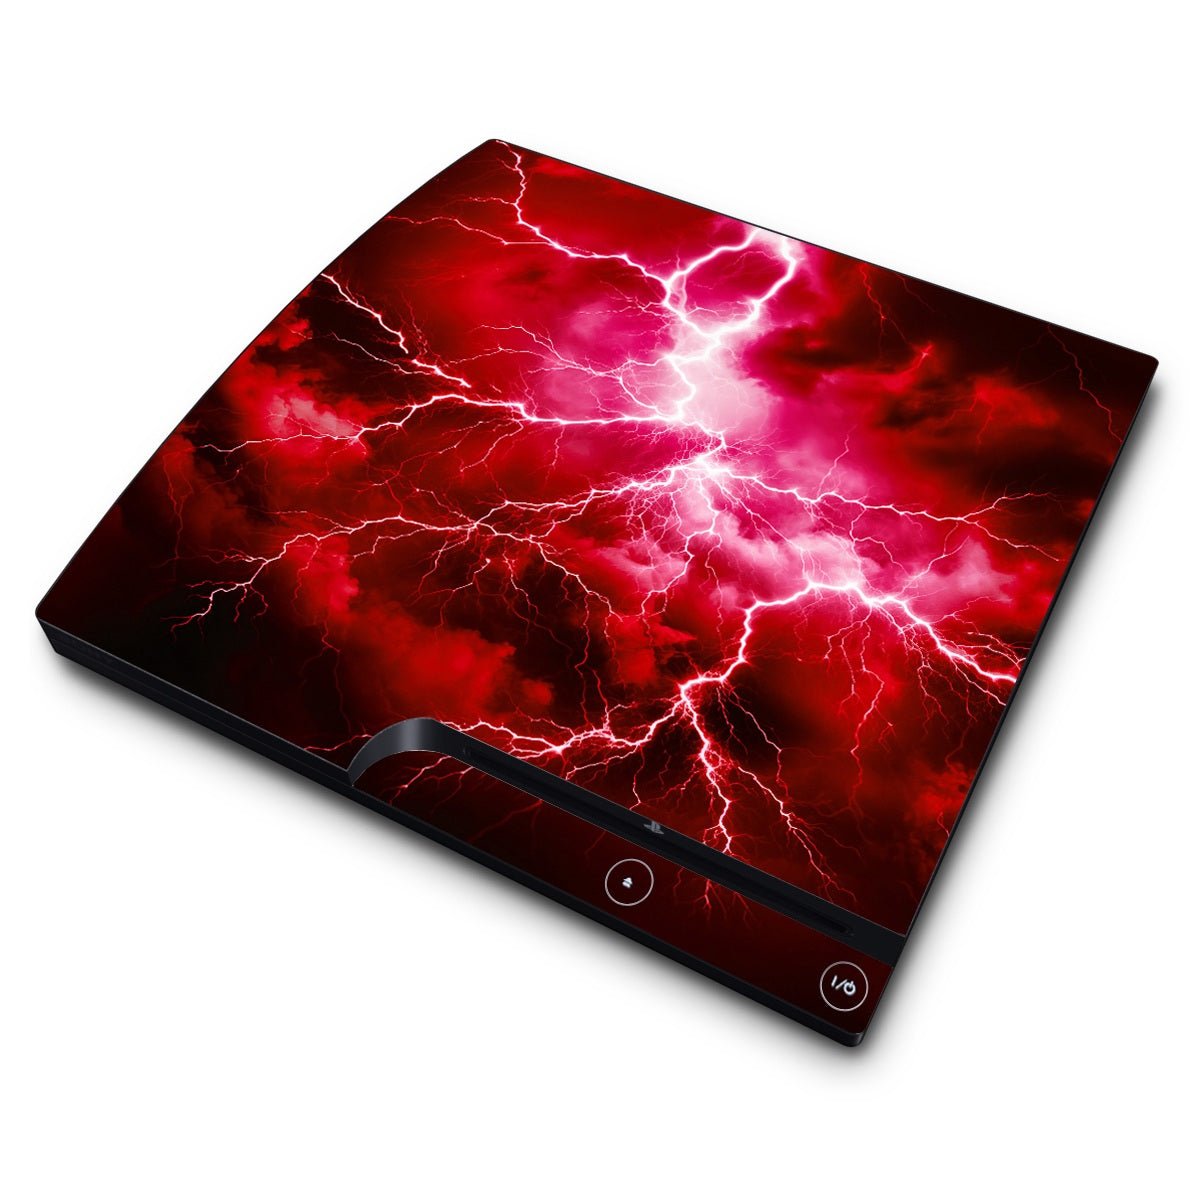 Apocalypse Red - Sony PS3 Slim Skin - Gaming - DecalGirl